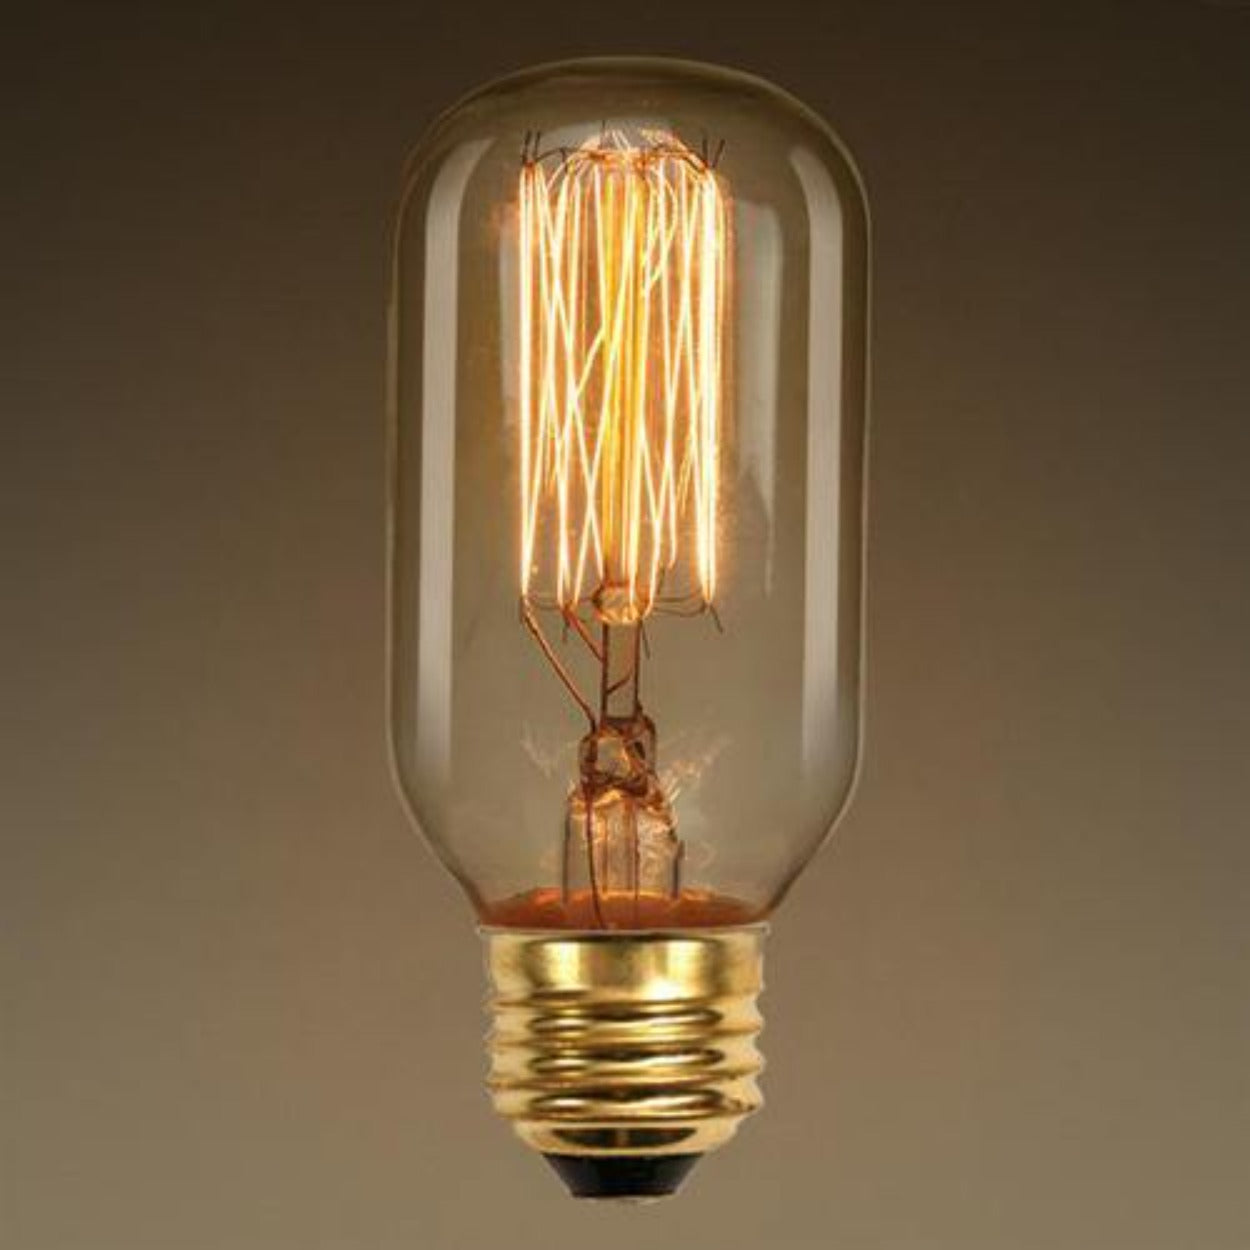 ANKUR GLO T45 LED LAMP - Ankur Lighting